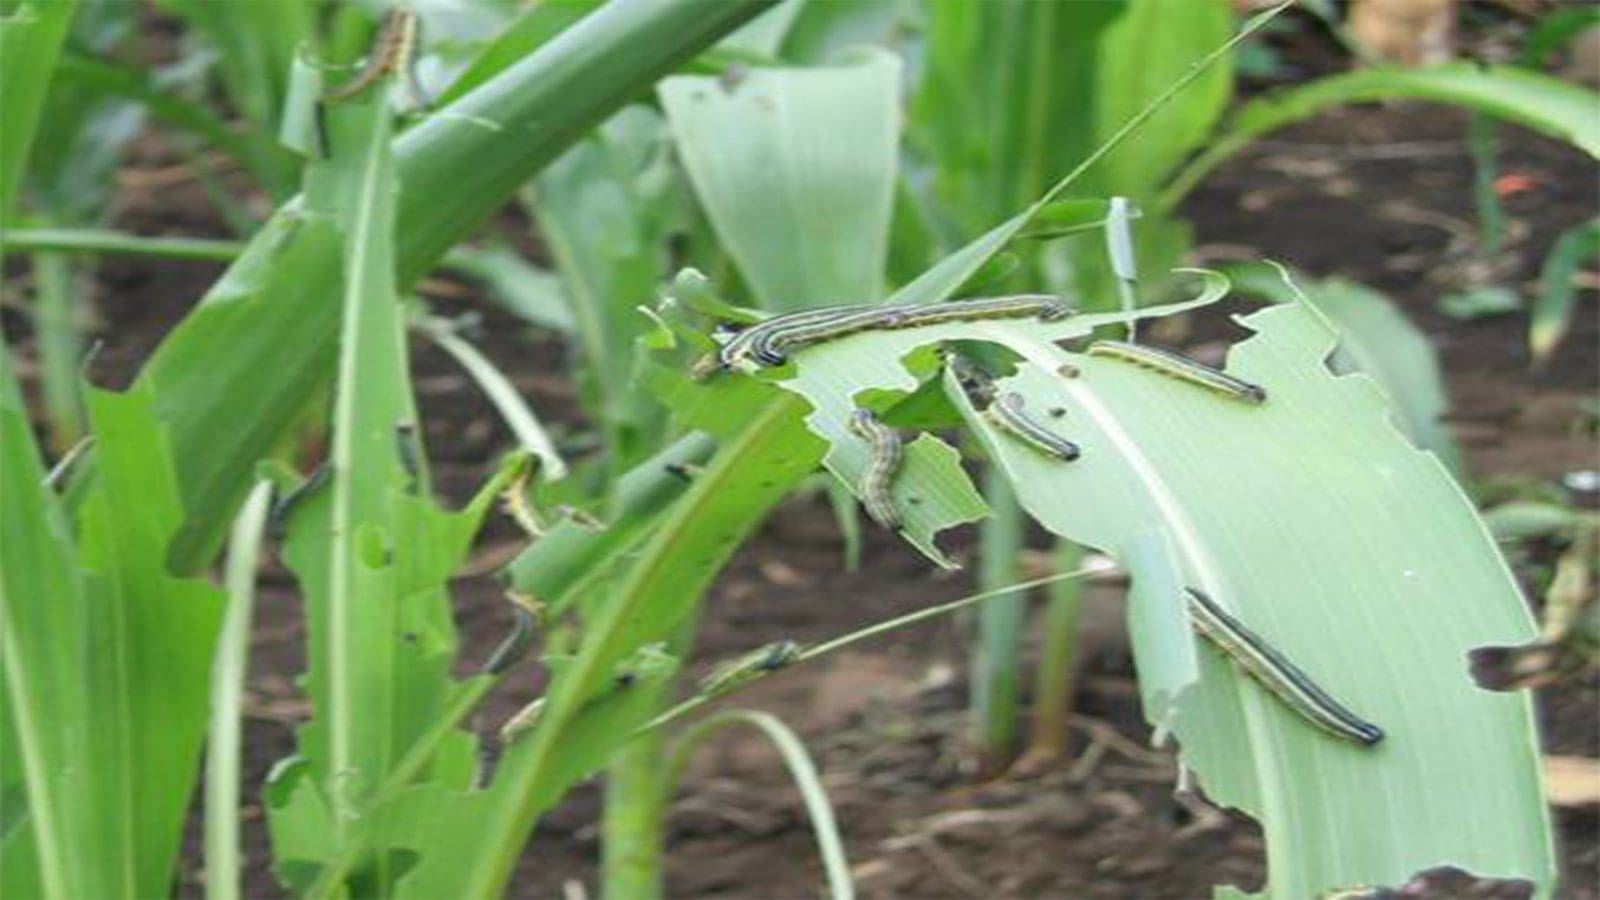 African armyworm resurgence threatens Eastern Africa’s agriculture as FAO raises alert